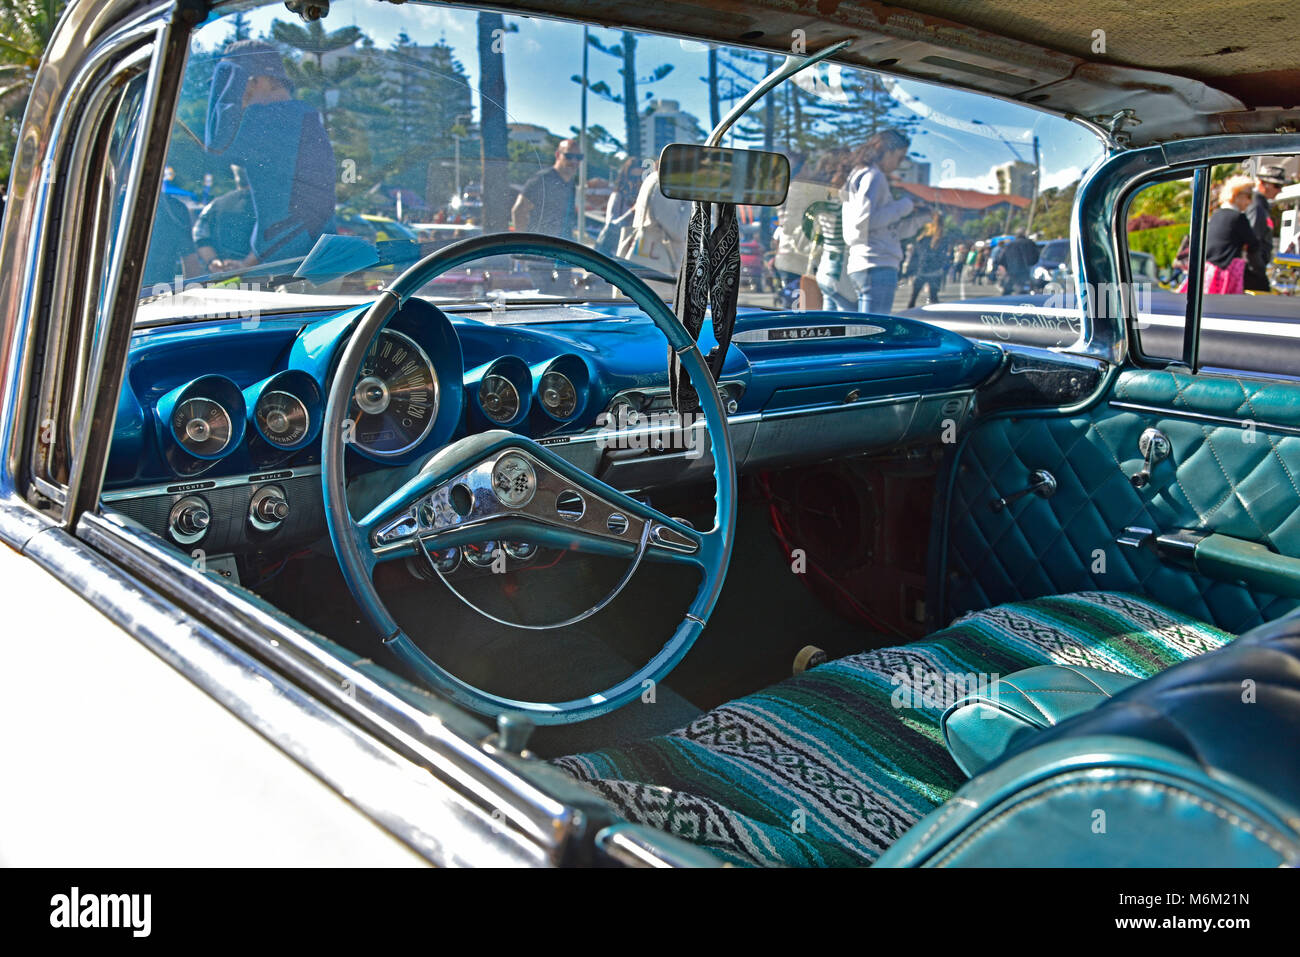 Recover Saturate Hubert Hudson interior of classic american chevrolet impala Stock Photo - Alamy